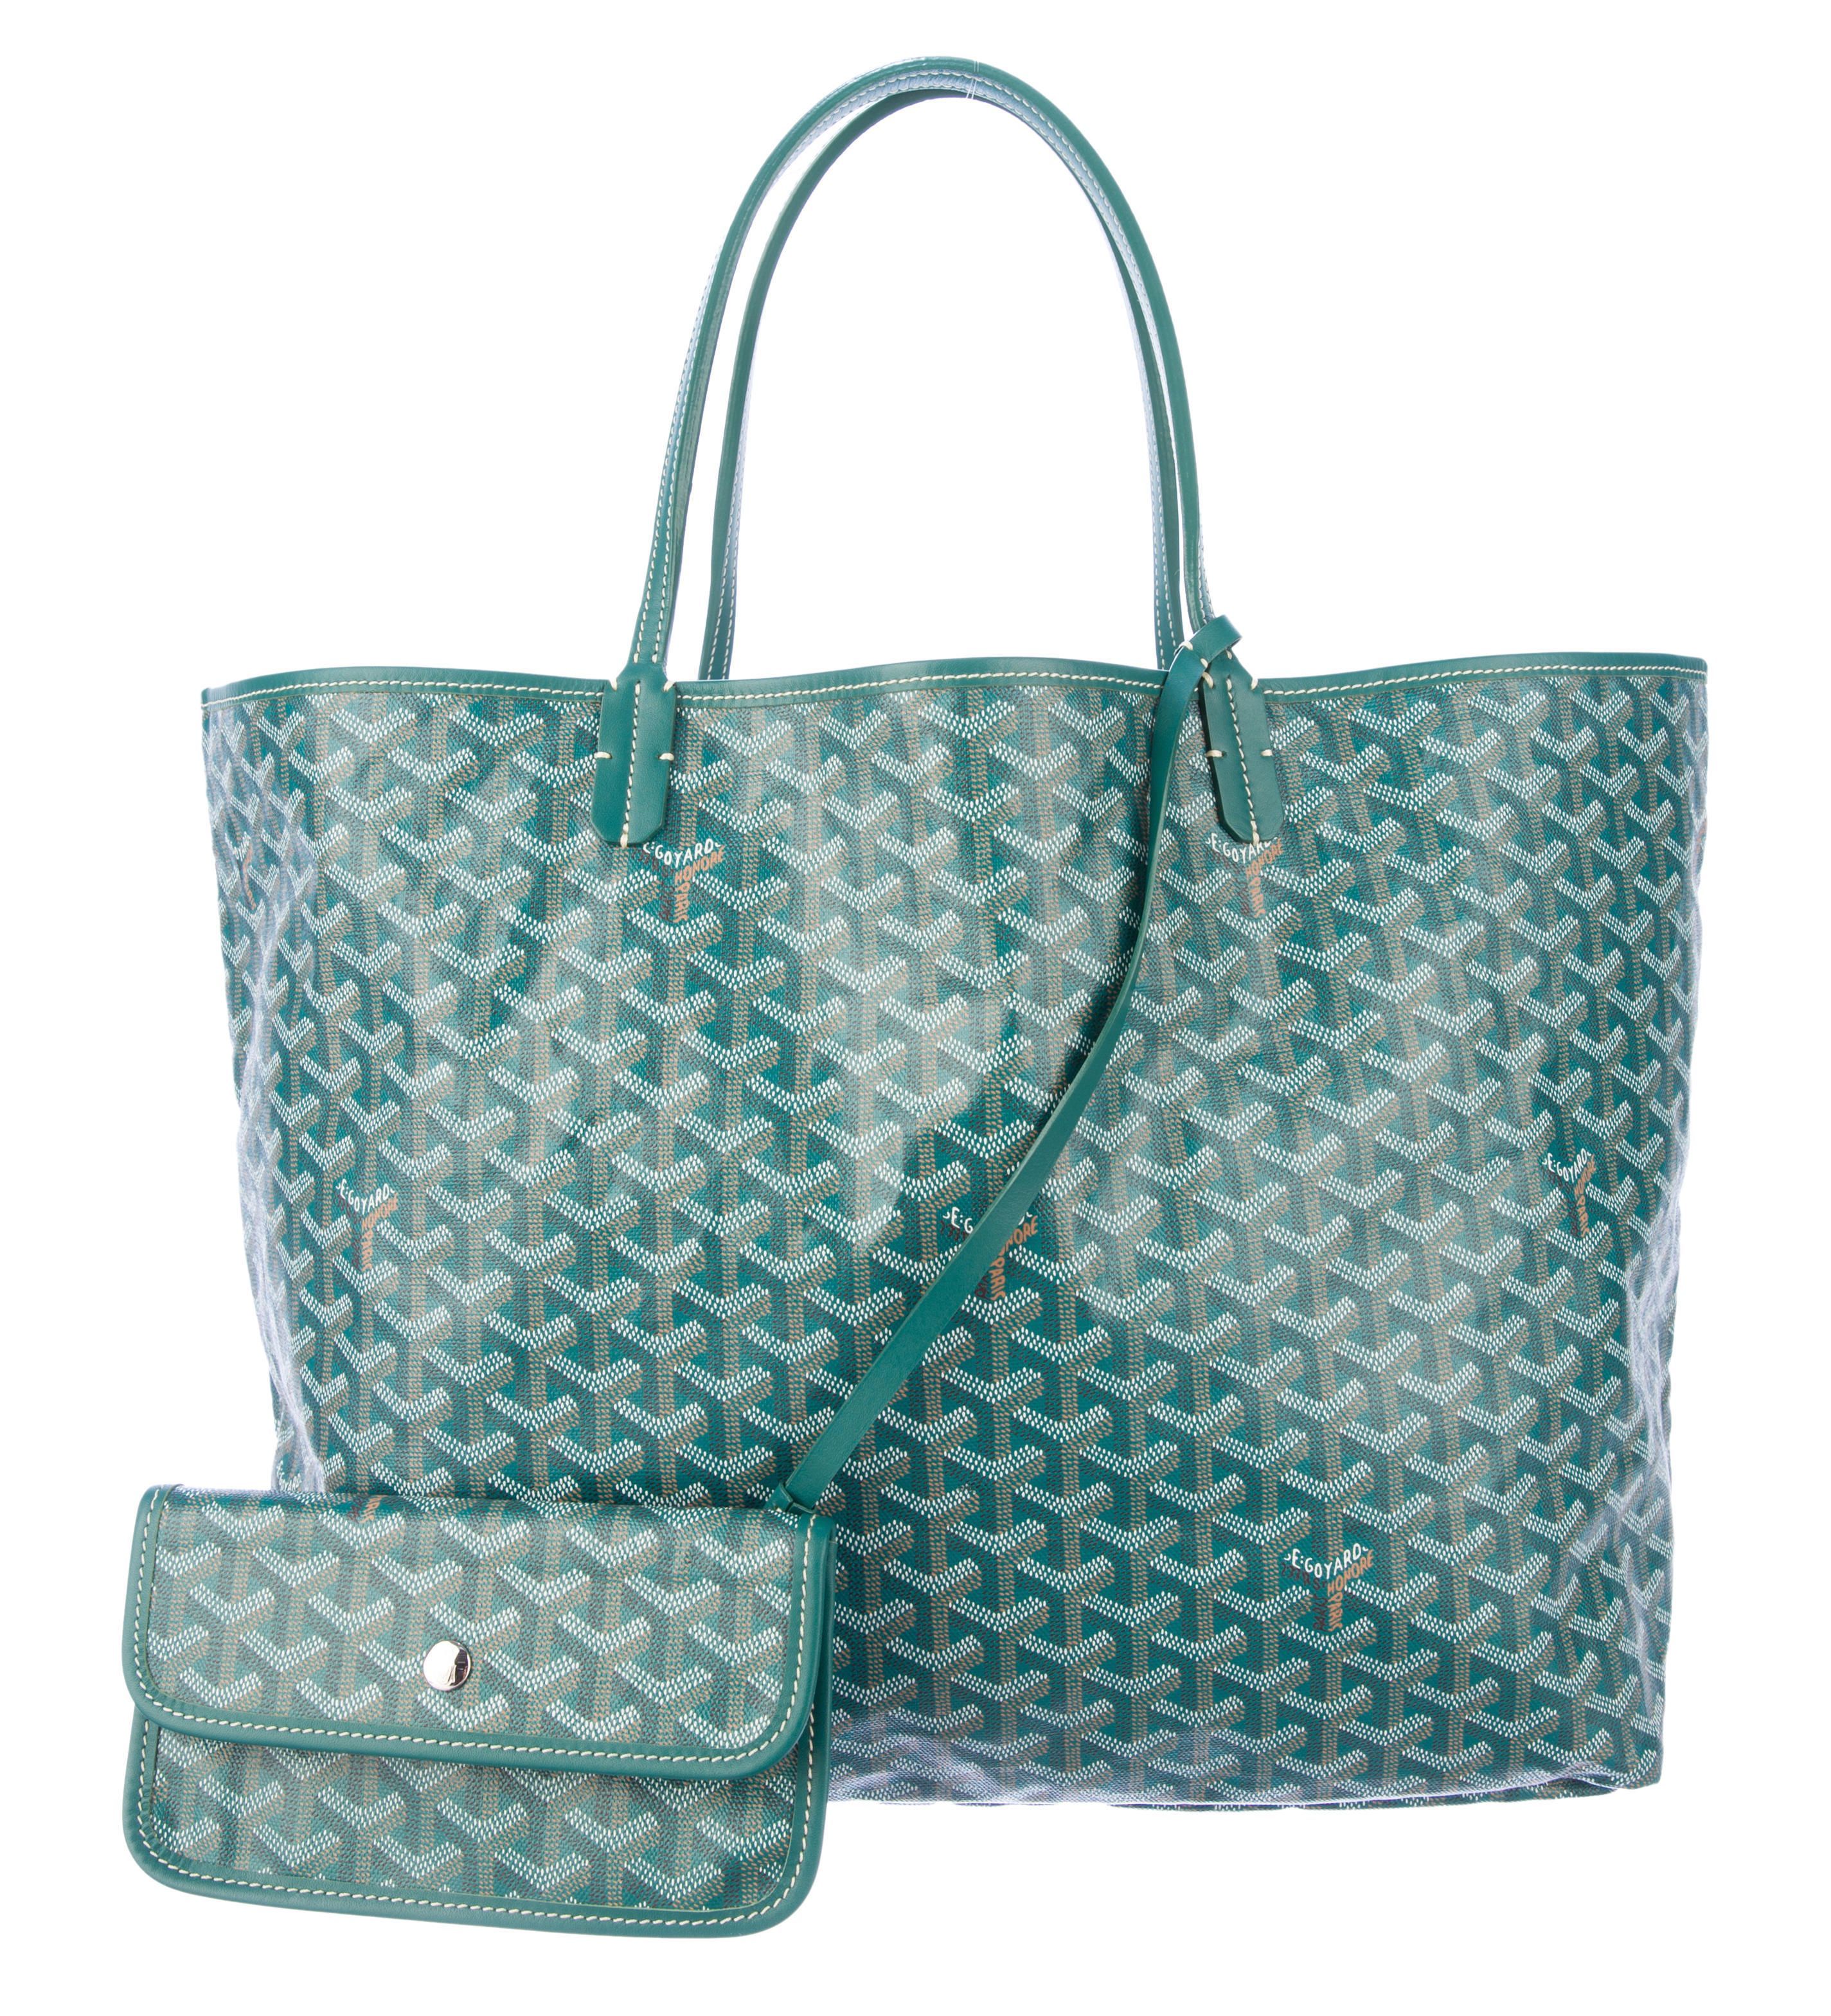 Designer Tote Bag Patterns | Paul Smith